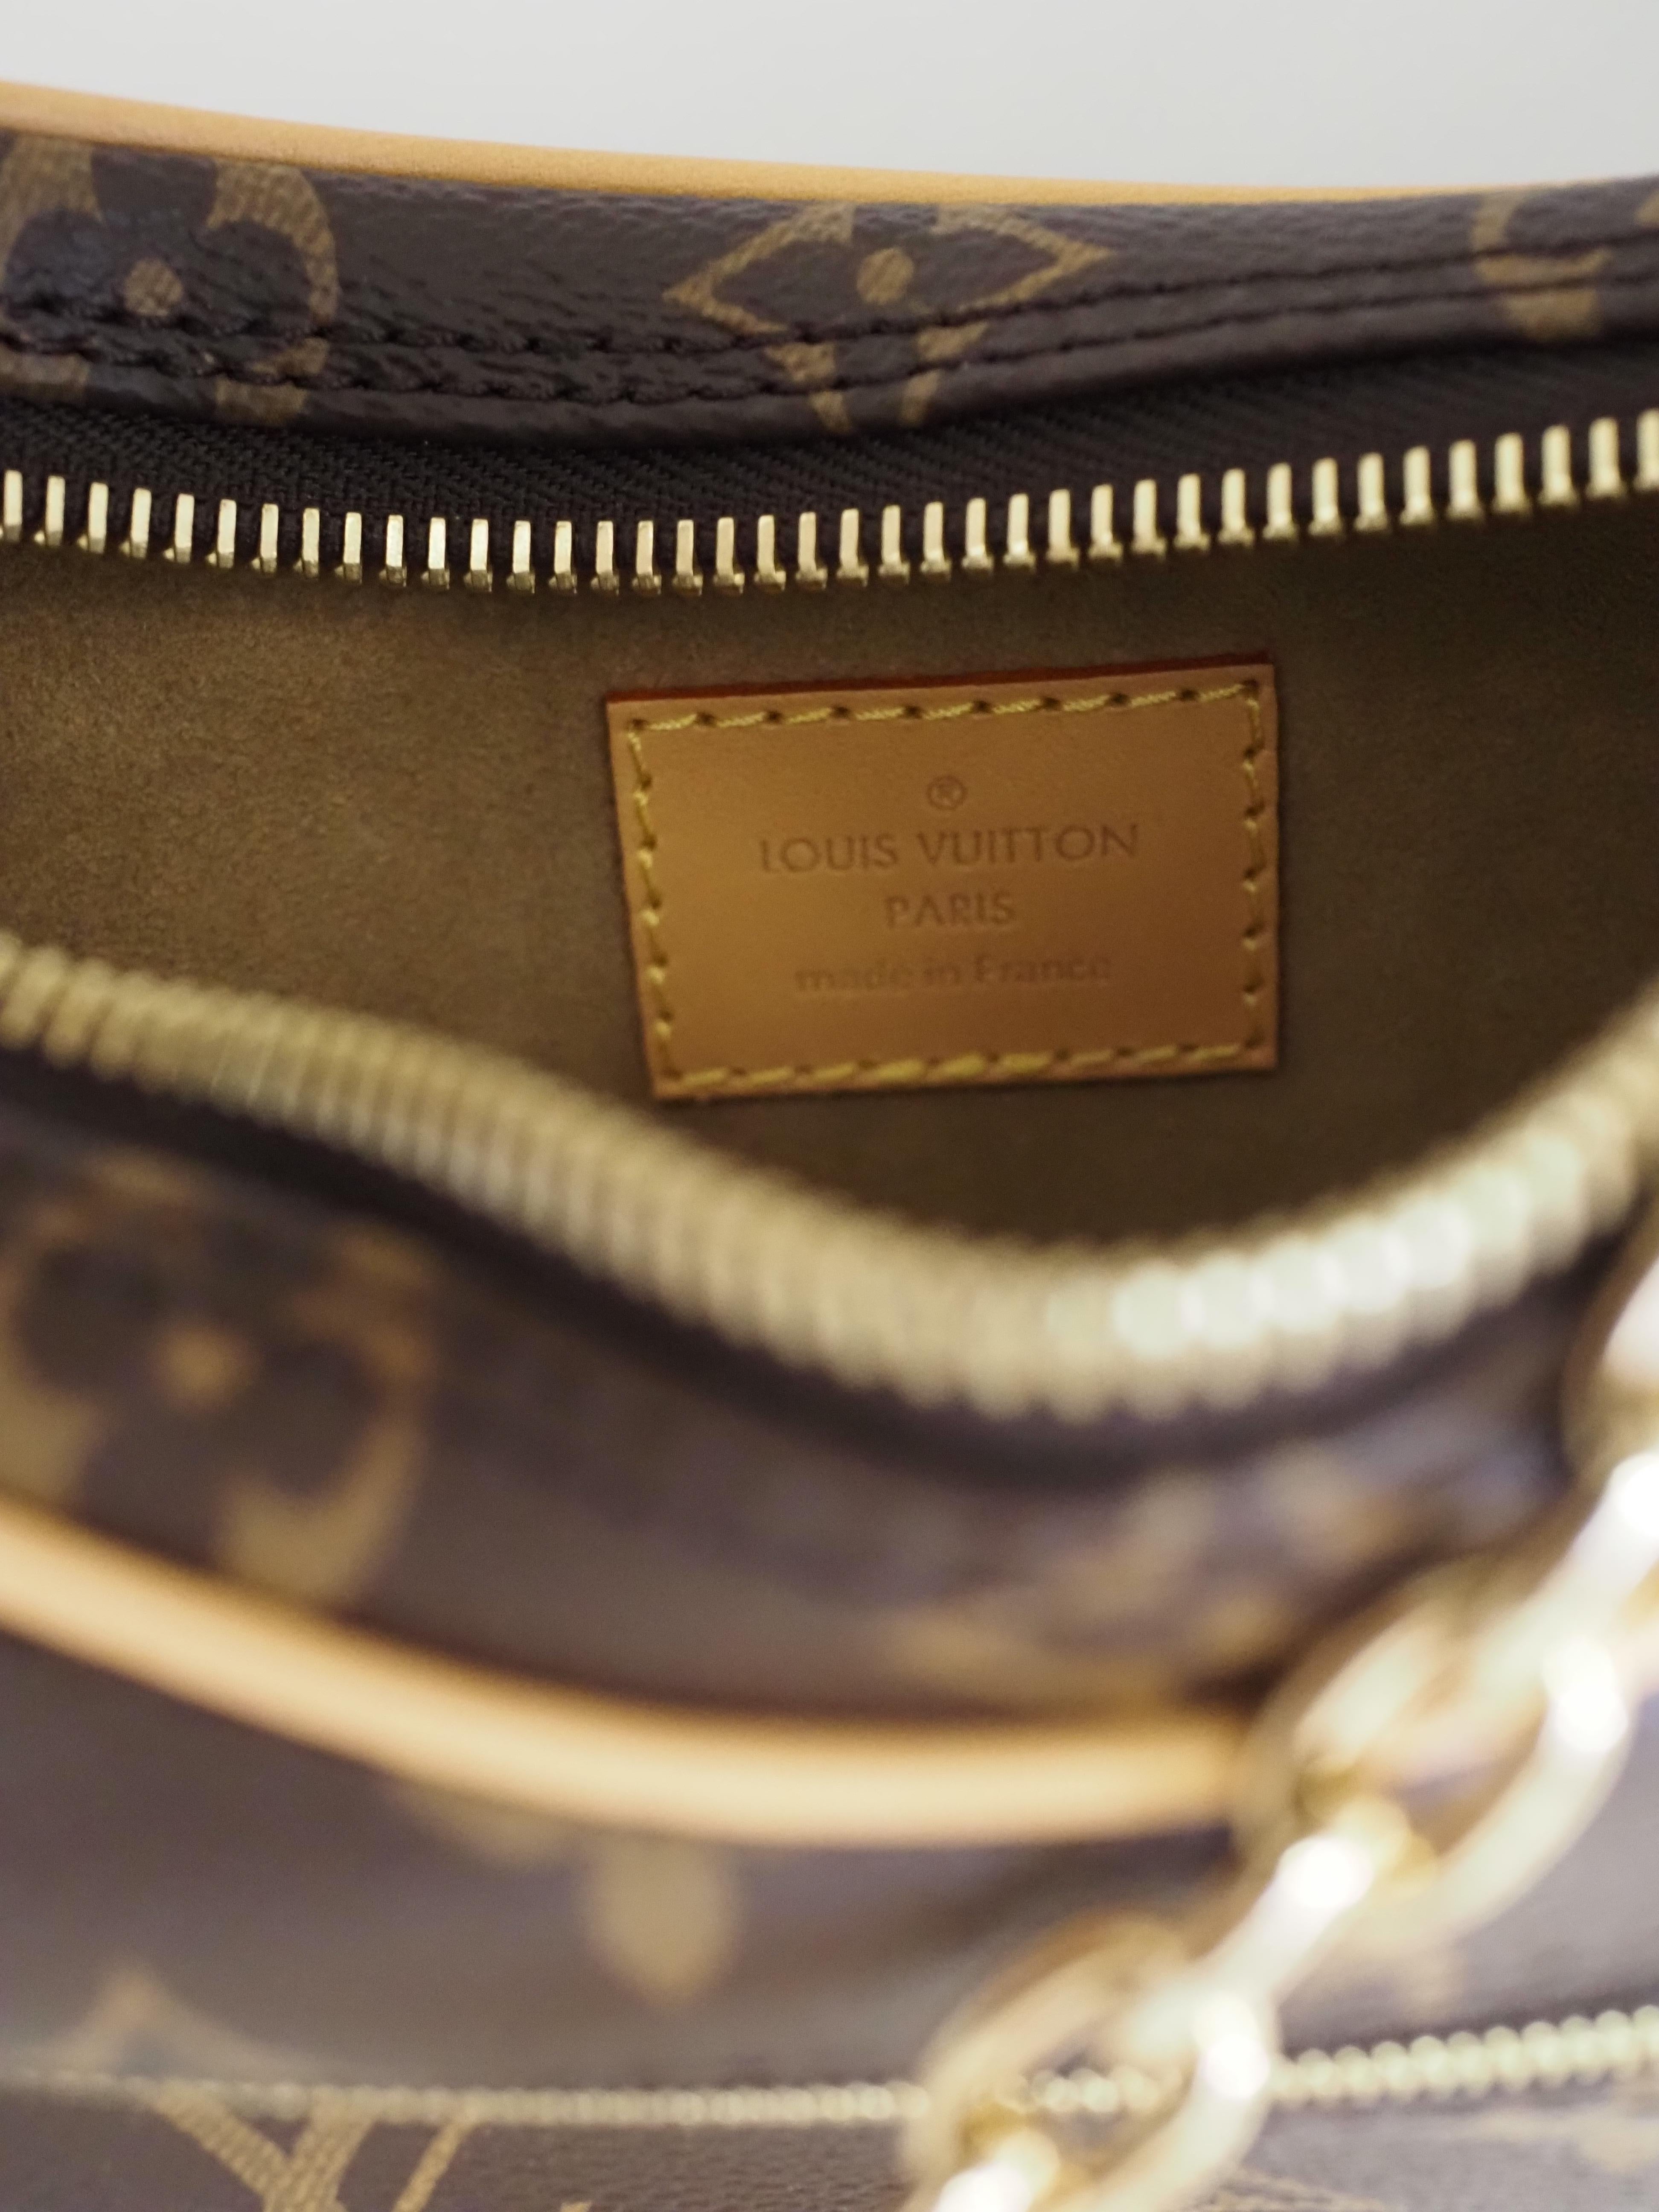 Louis Vuitton Loop baguette handbag shoulder bag NWOT 6